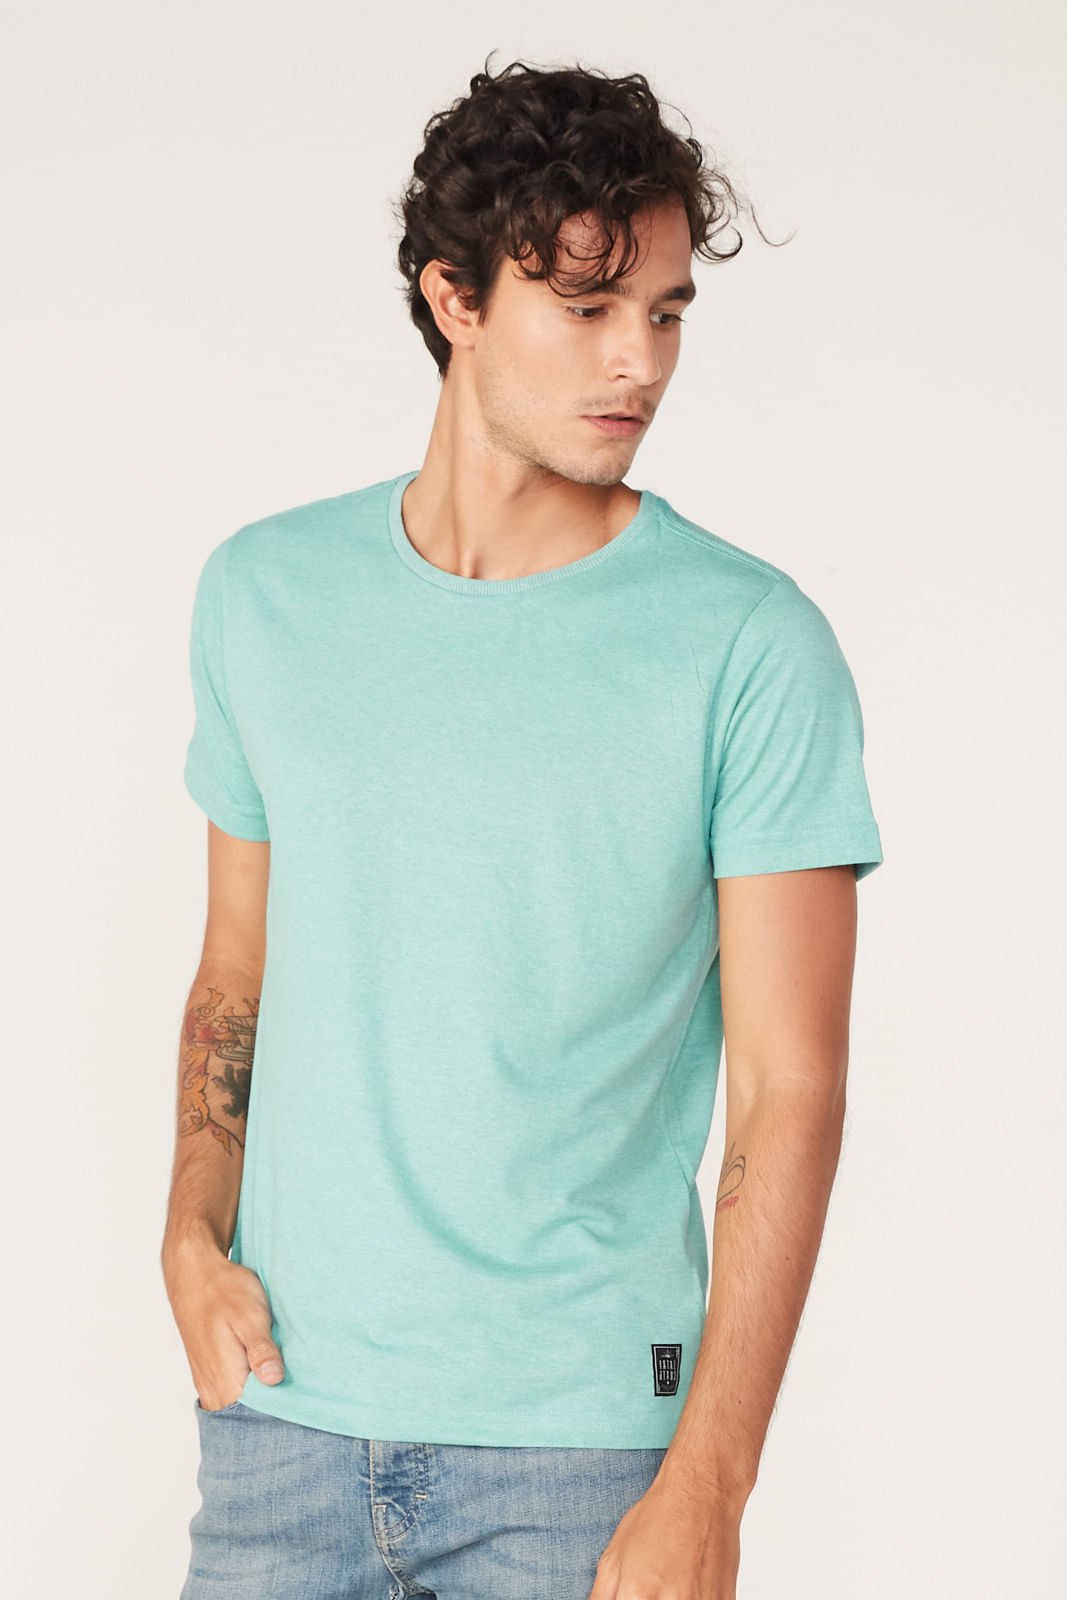 Camiseta Fatal Fashion Basic Verde Mescla